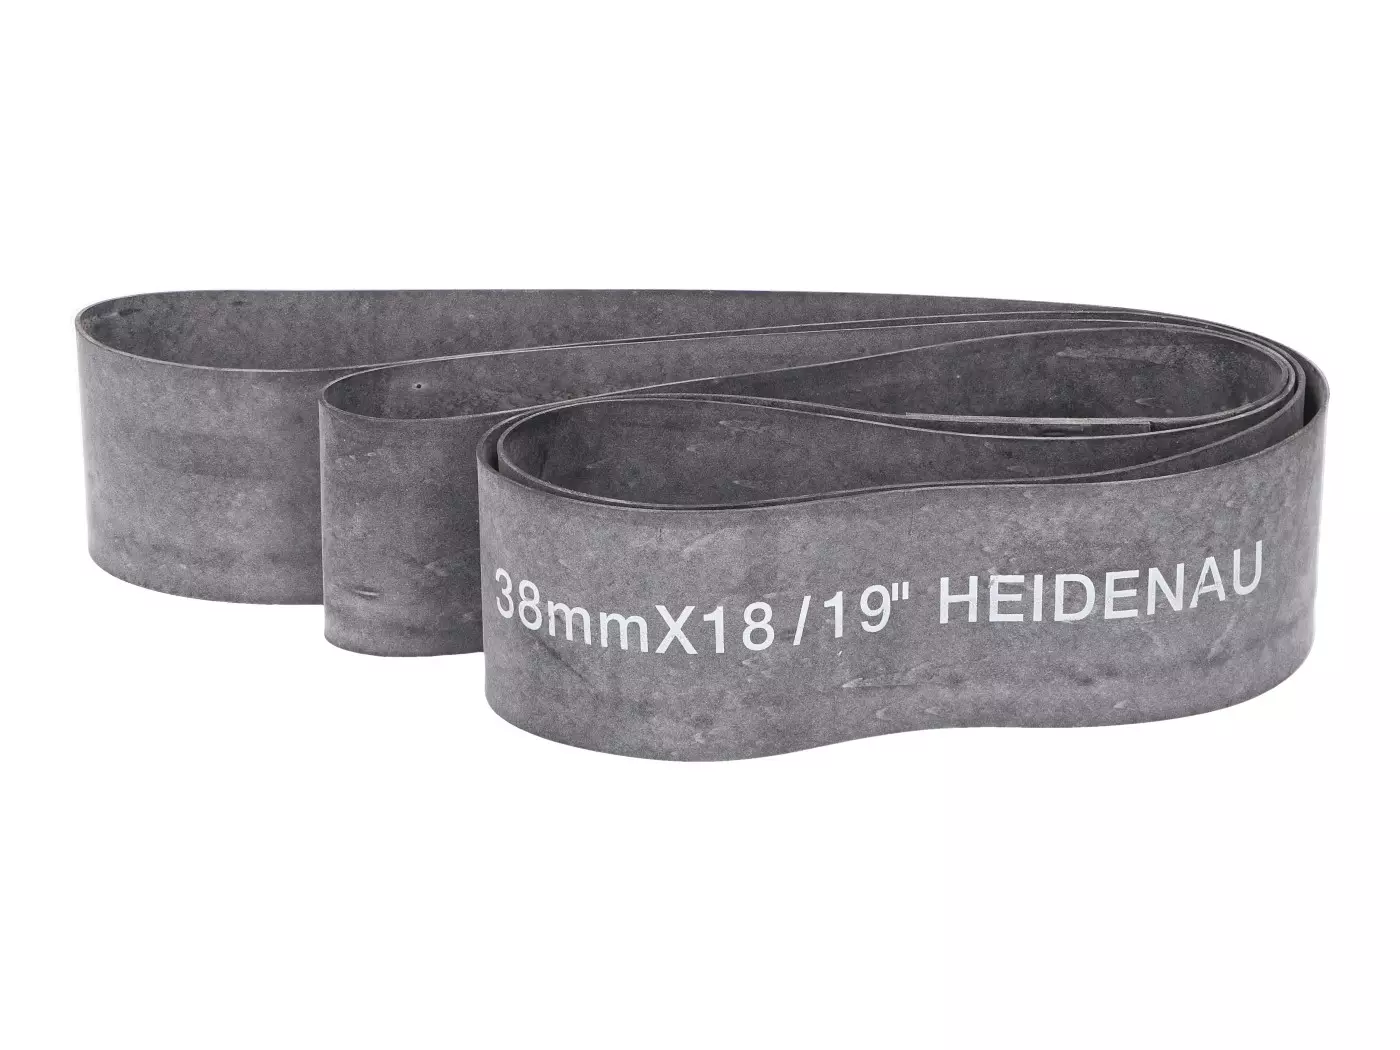 Rim Tape Heidenau 18-19 Inch - 38mm